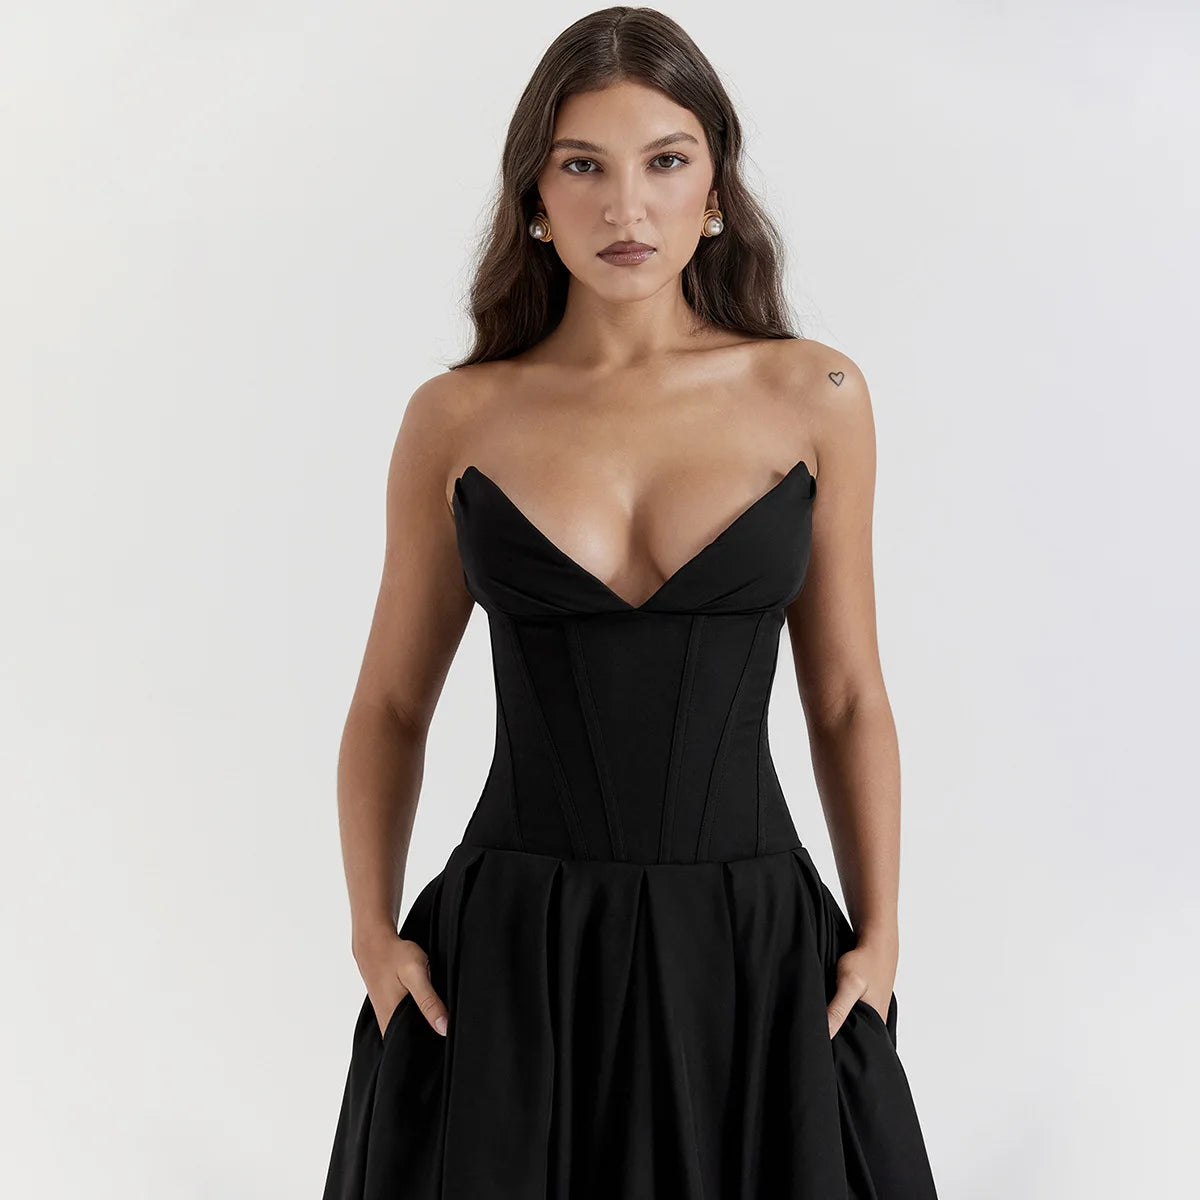 Strapless corset midi dress in black